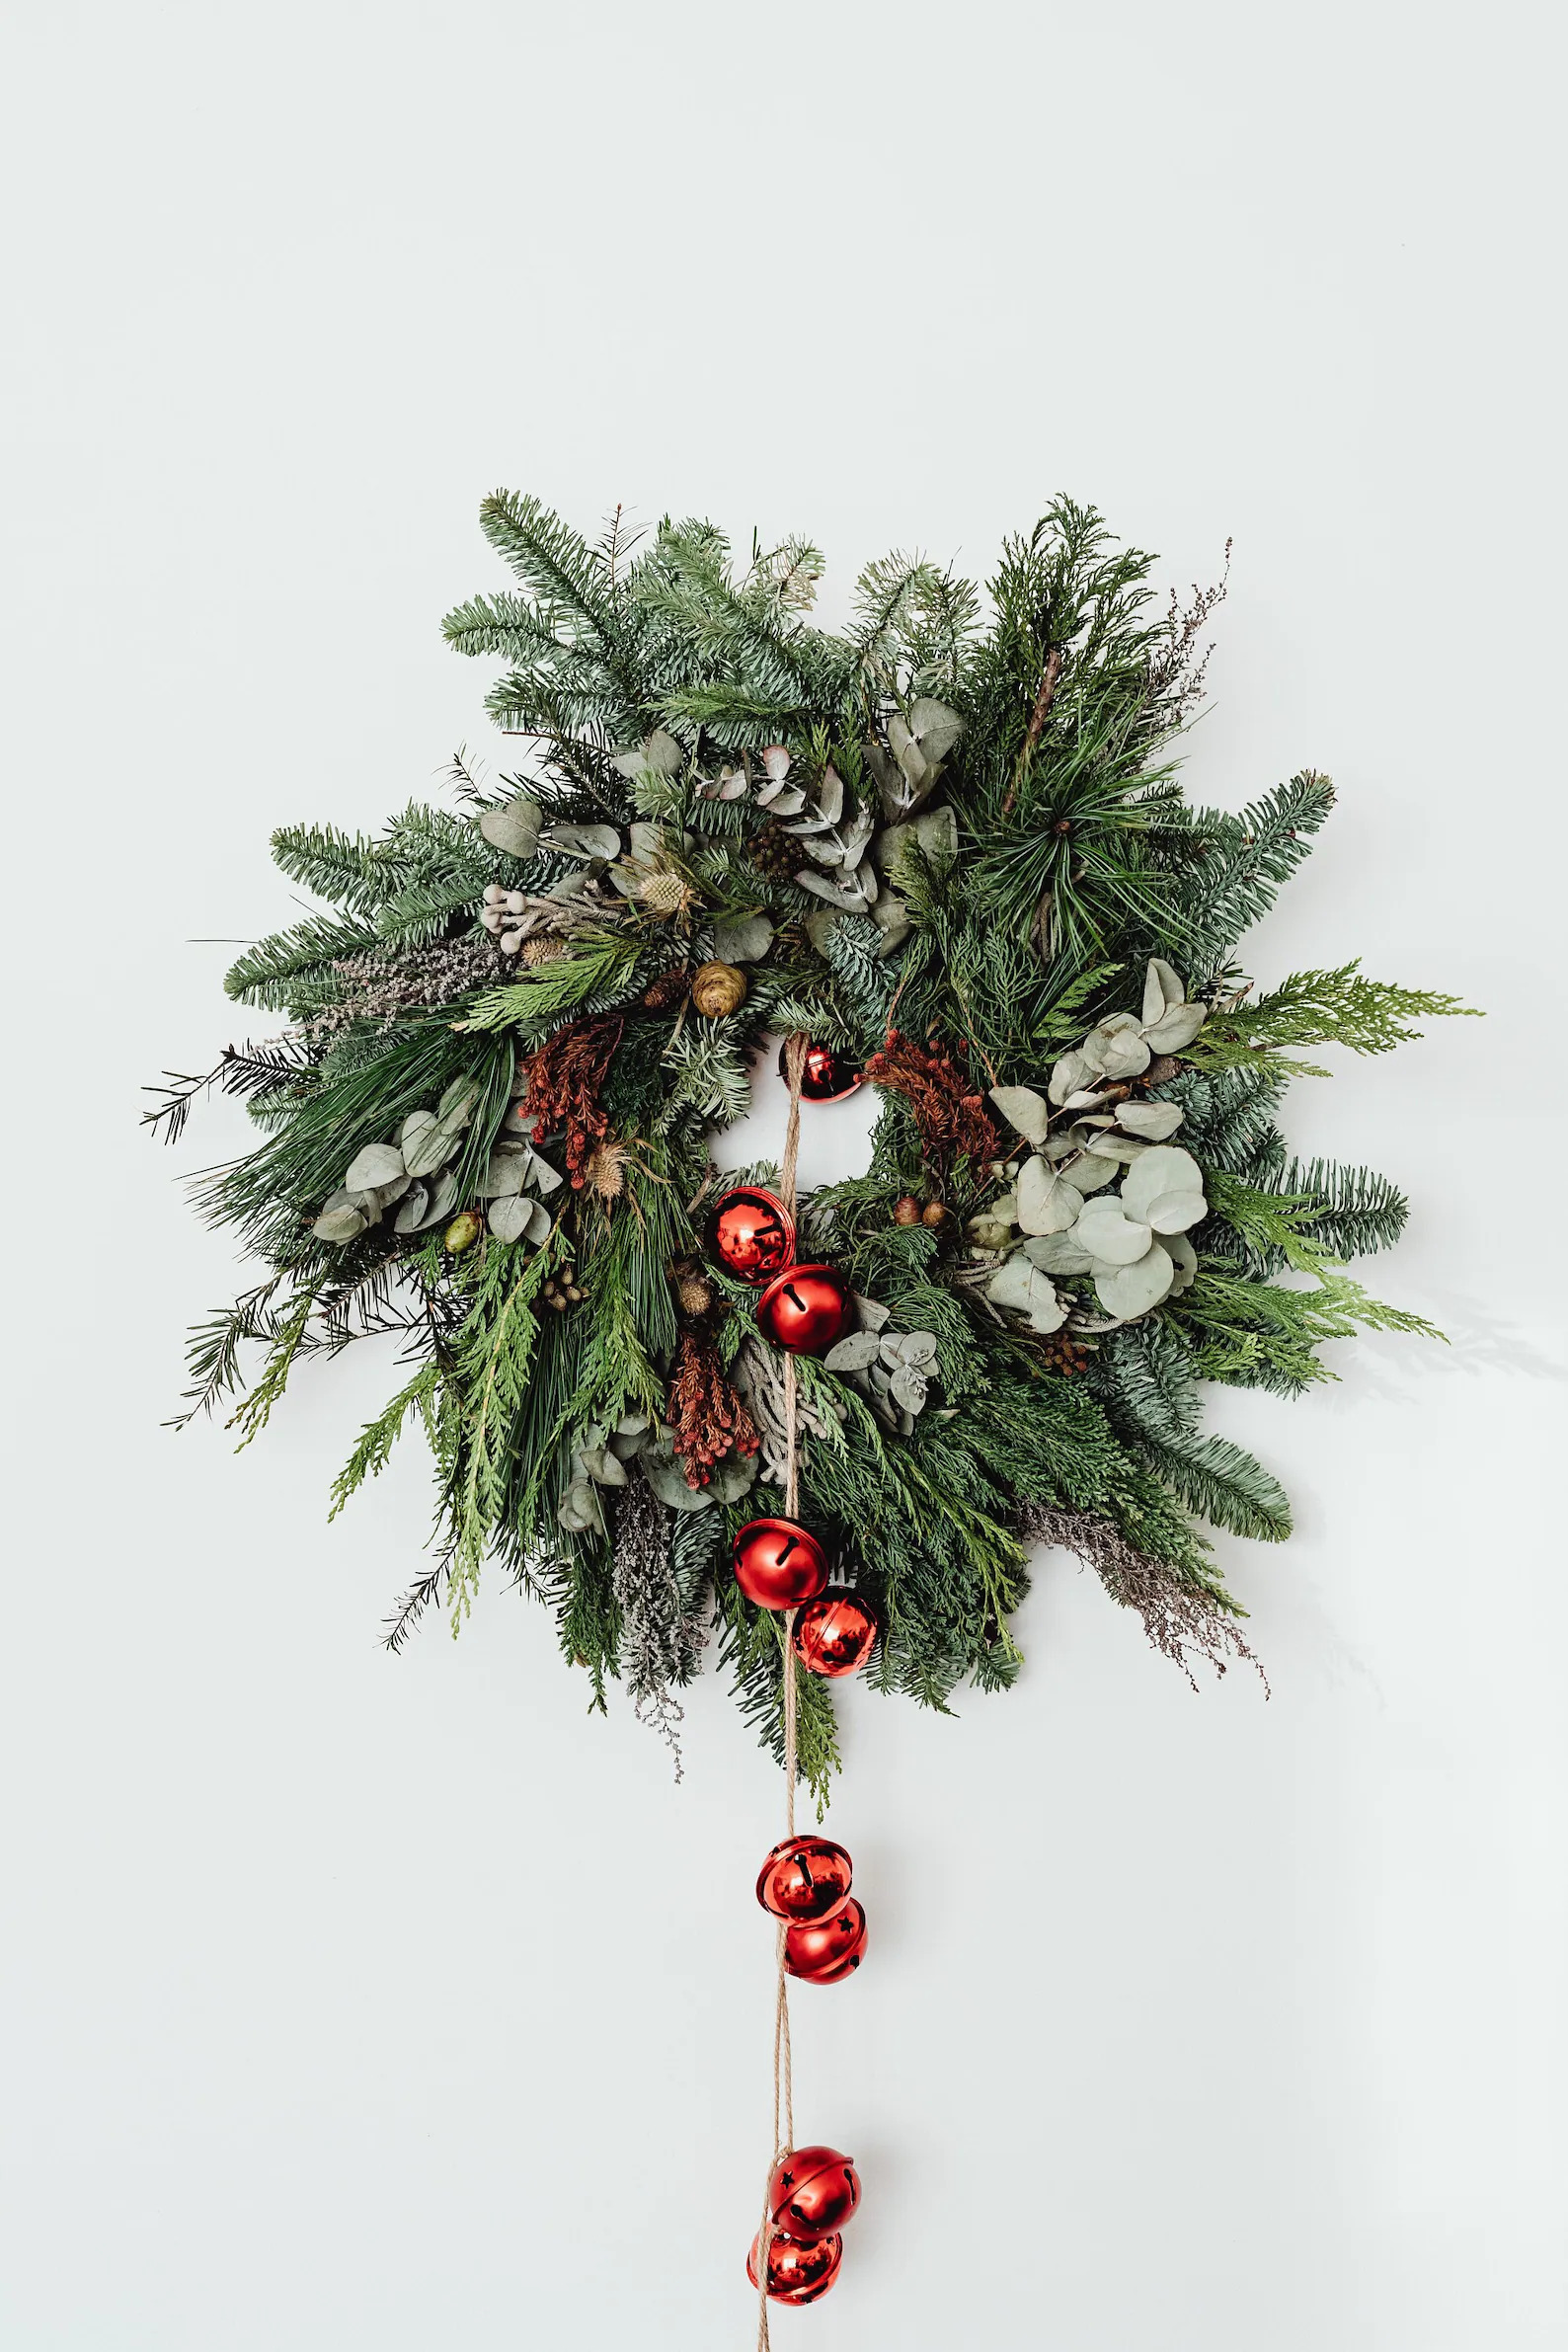 18 Wonderful Christmas Wreath Designs You Should Consider Now